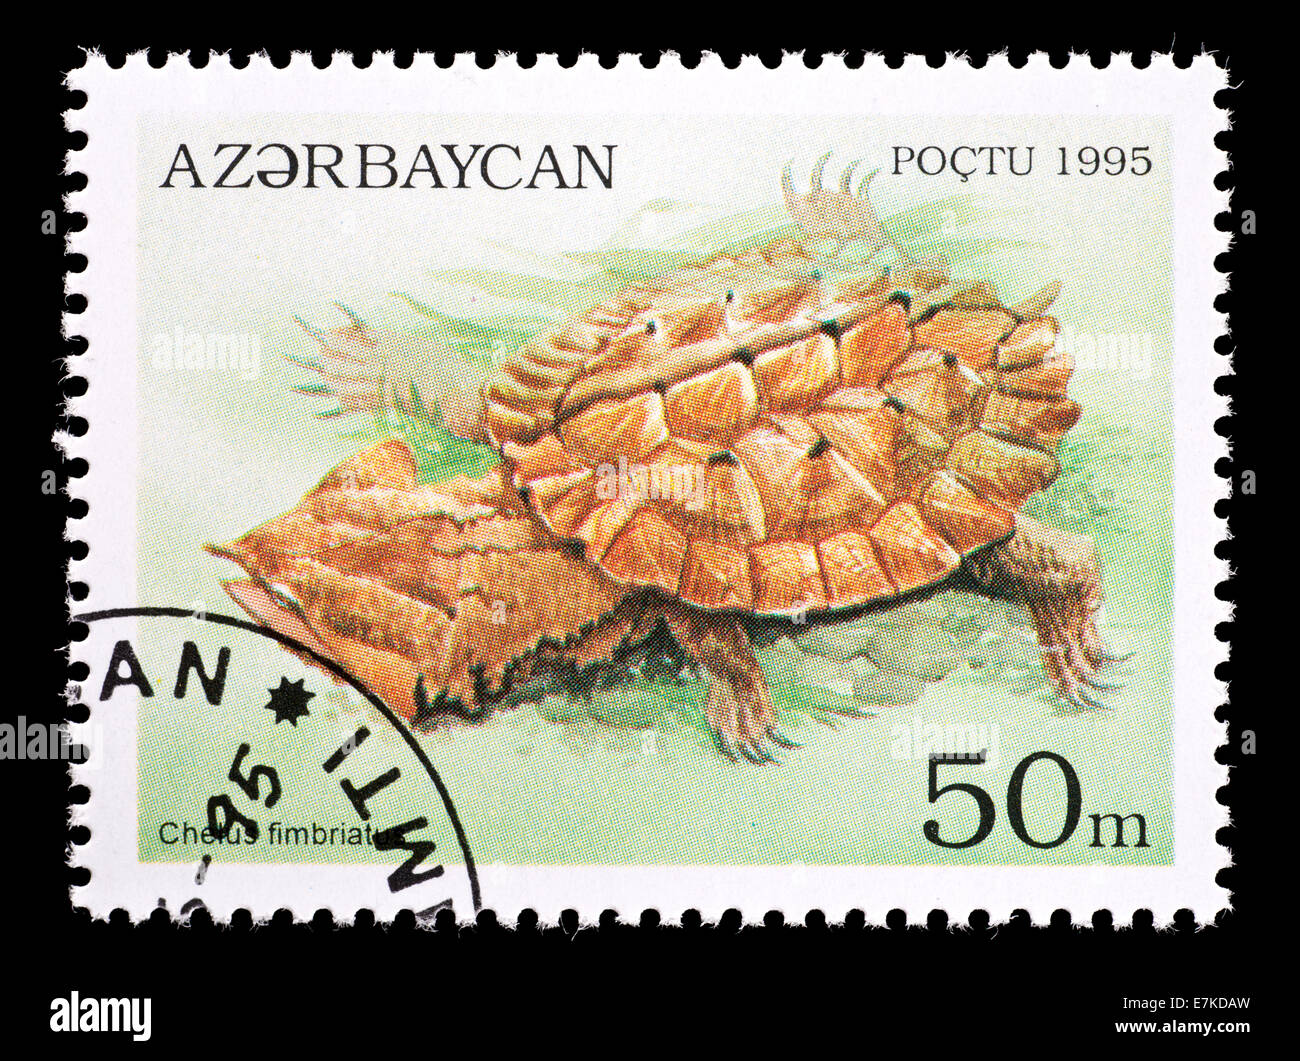 Francobollo da Azerbaigian raffigurante una tartaruga matamata (Chelus fimbriatus) Foto Stock